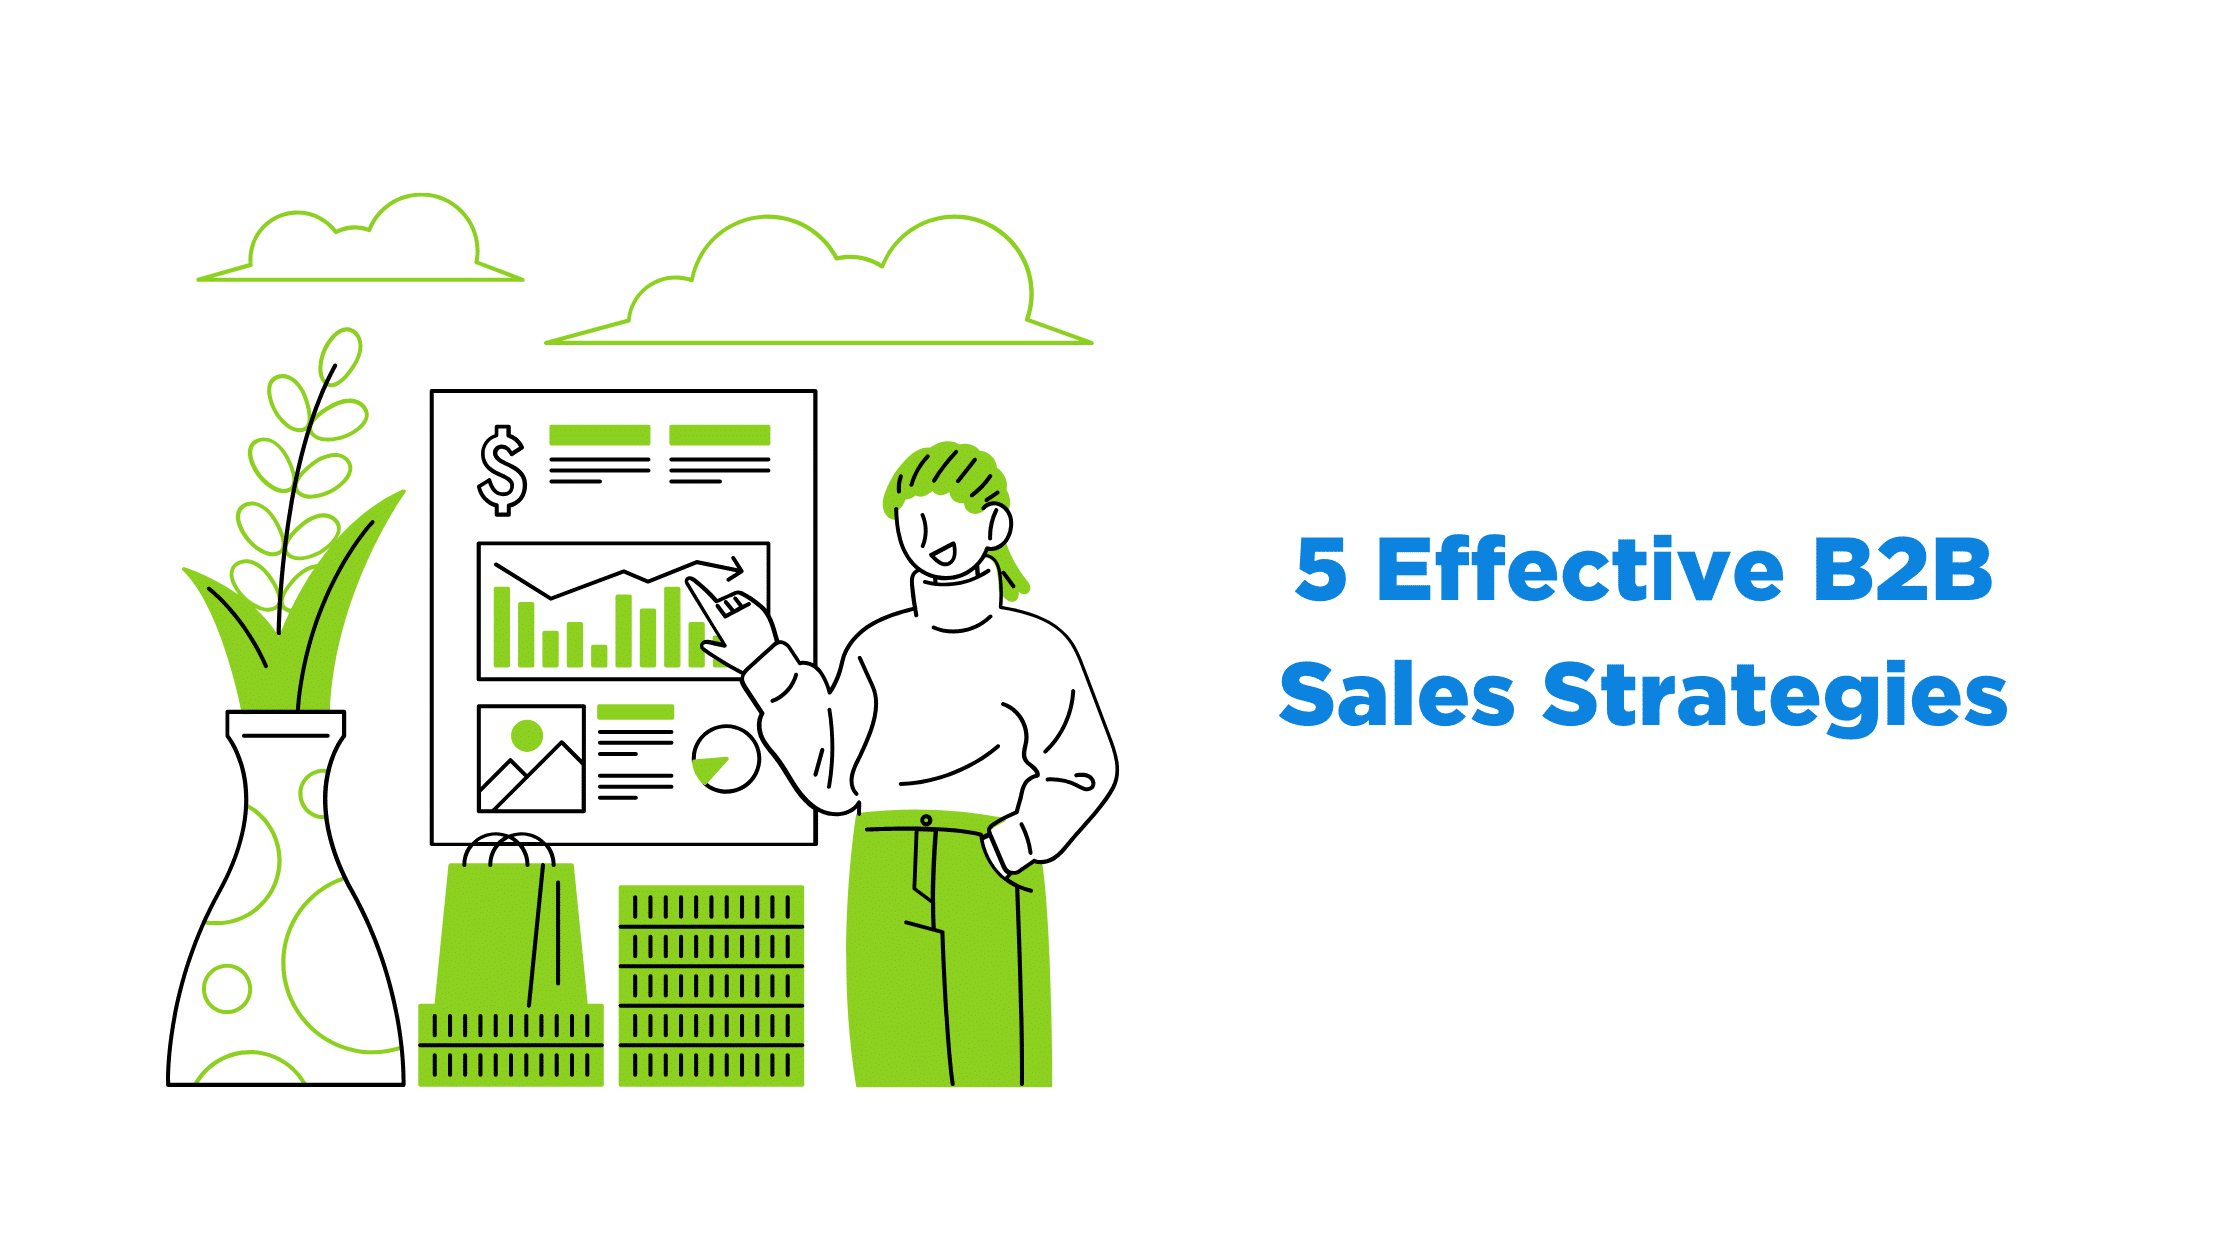 5 Effective B2B Sales Strategies